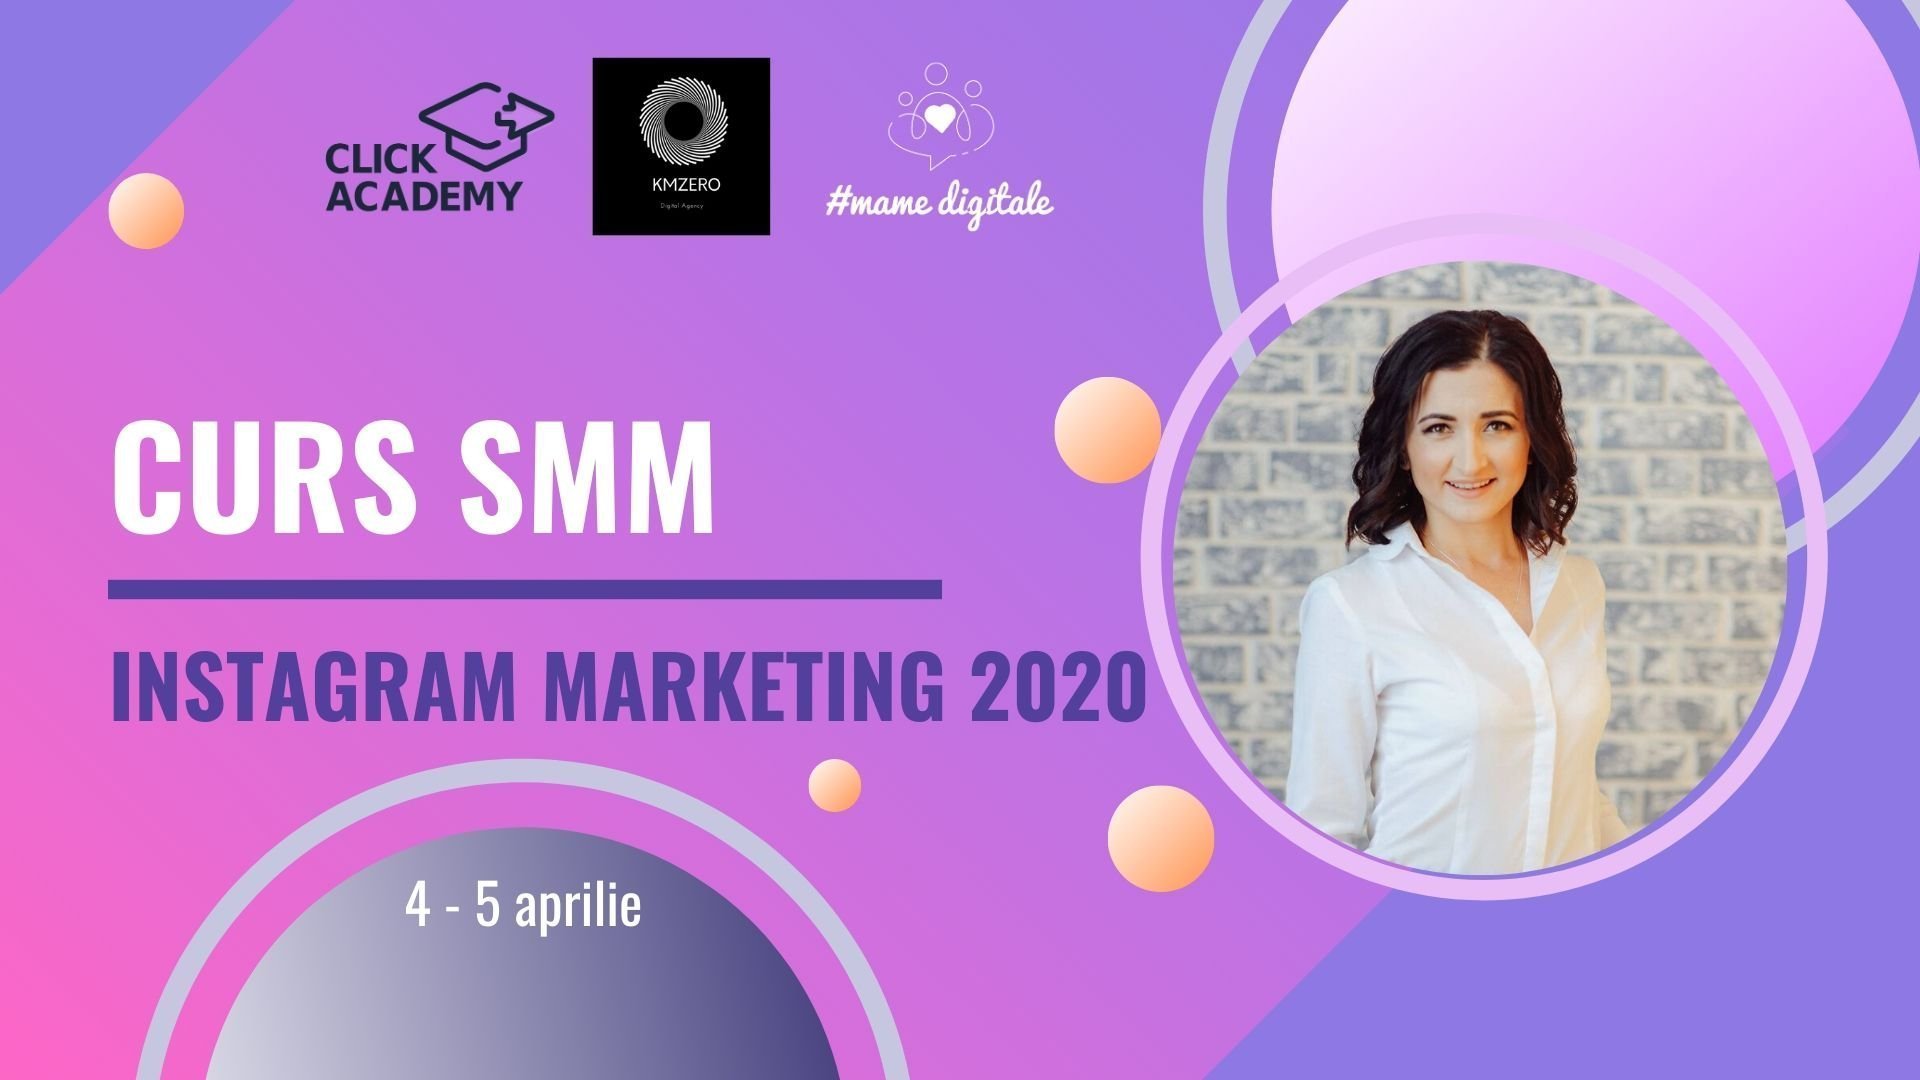 Curs SMM Instagram Marketing 2020 | Curs Practic cu Lia Pogolsa